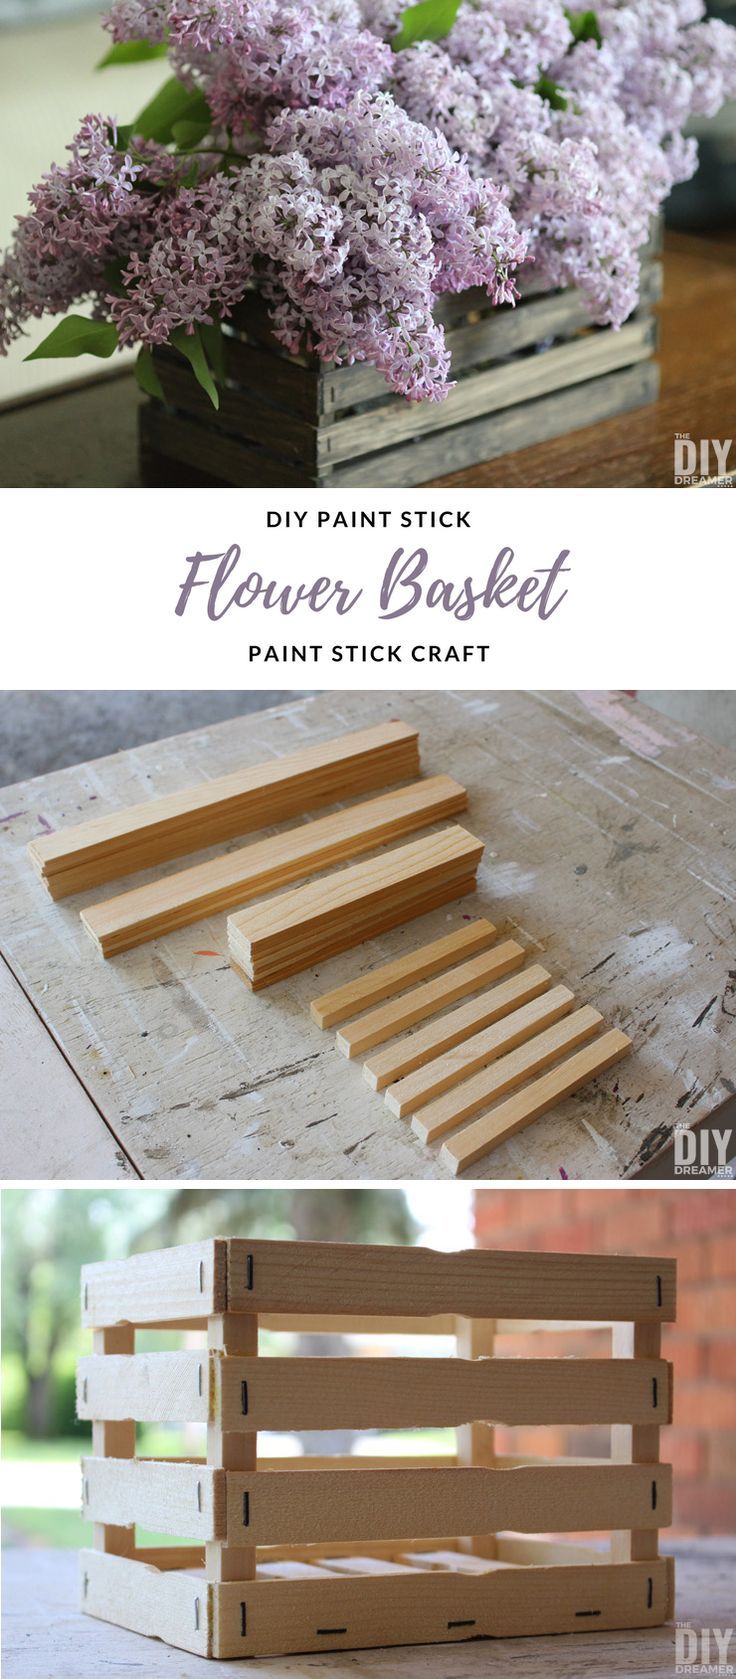 DIY Paint Stick Flower Basket - Paint Stick Craft